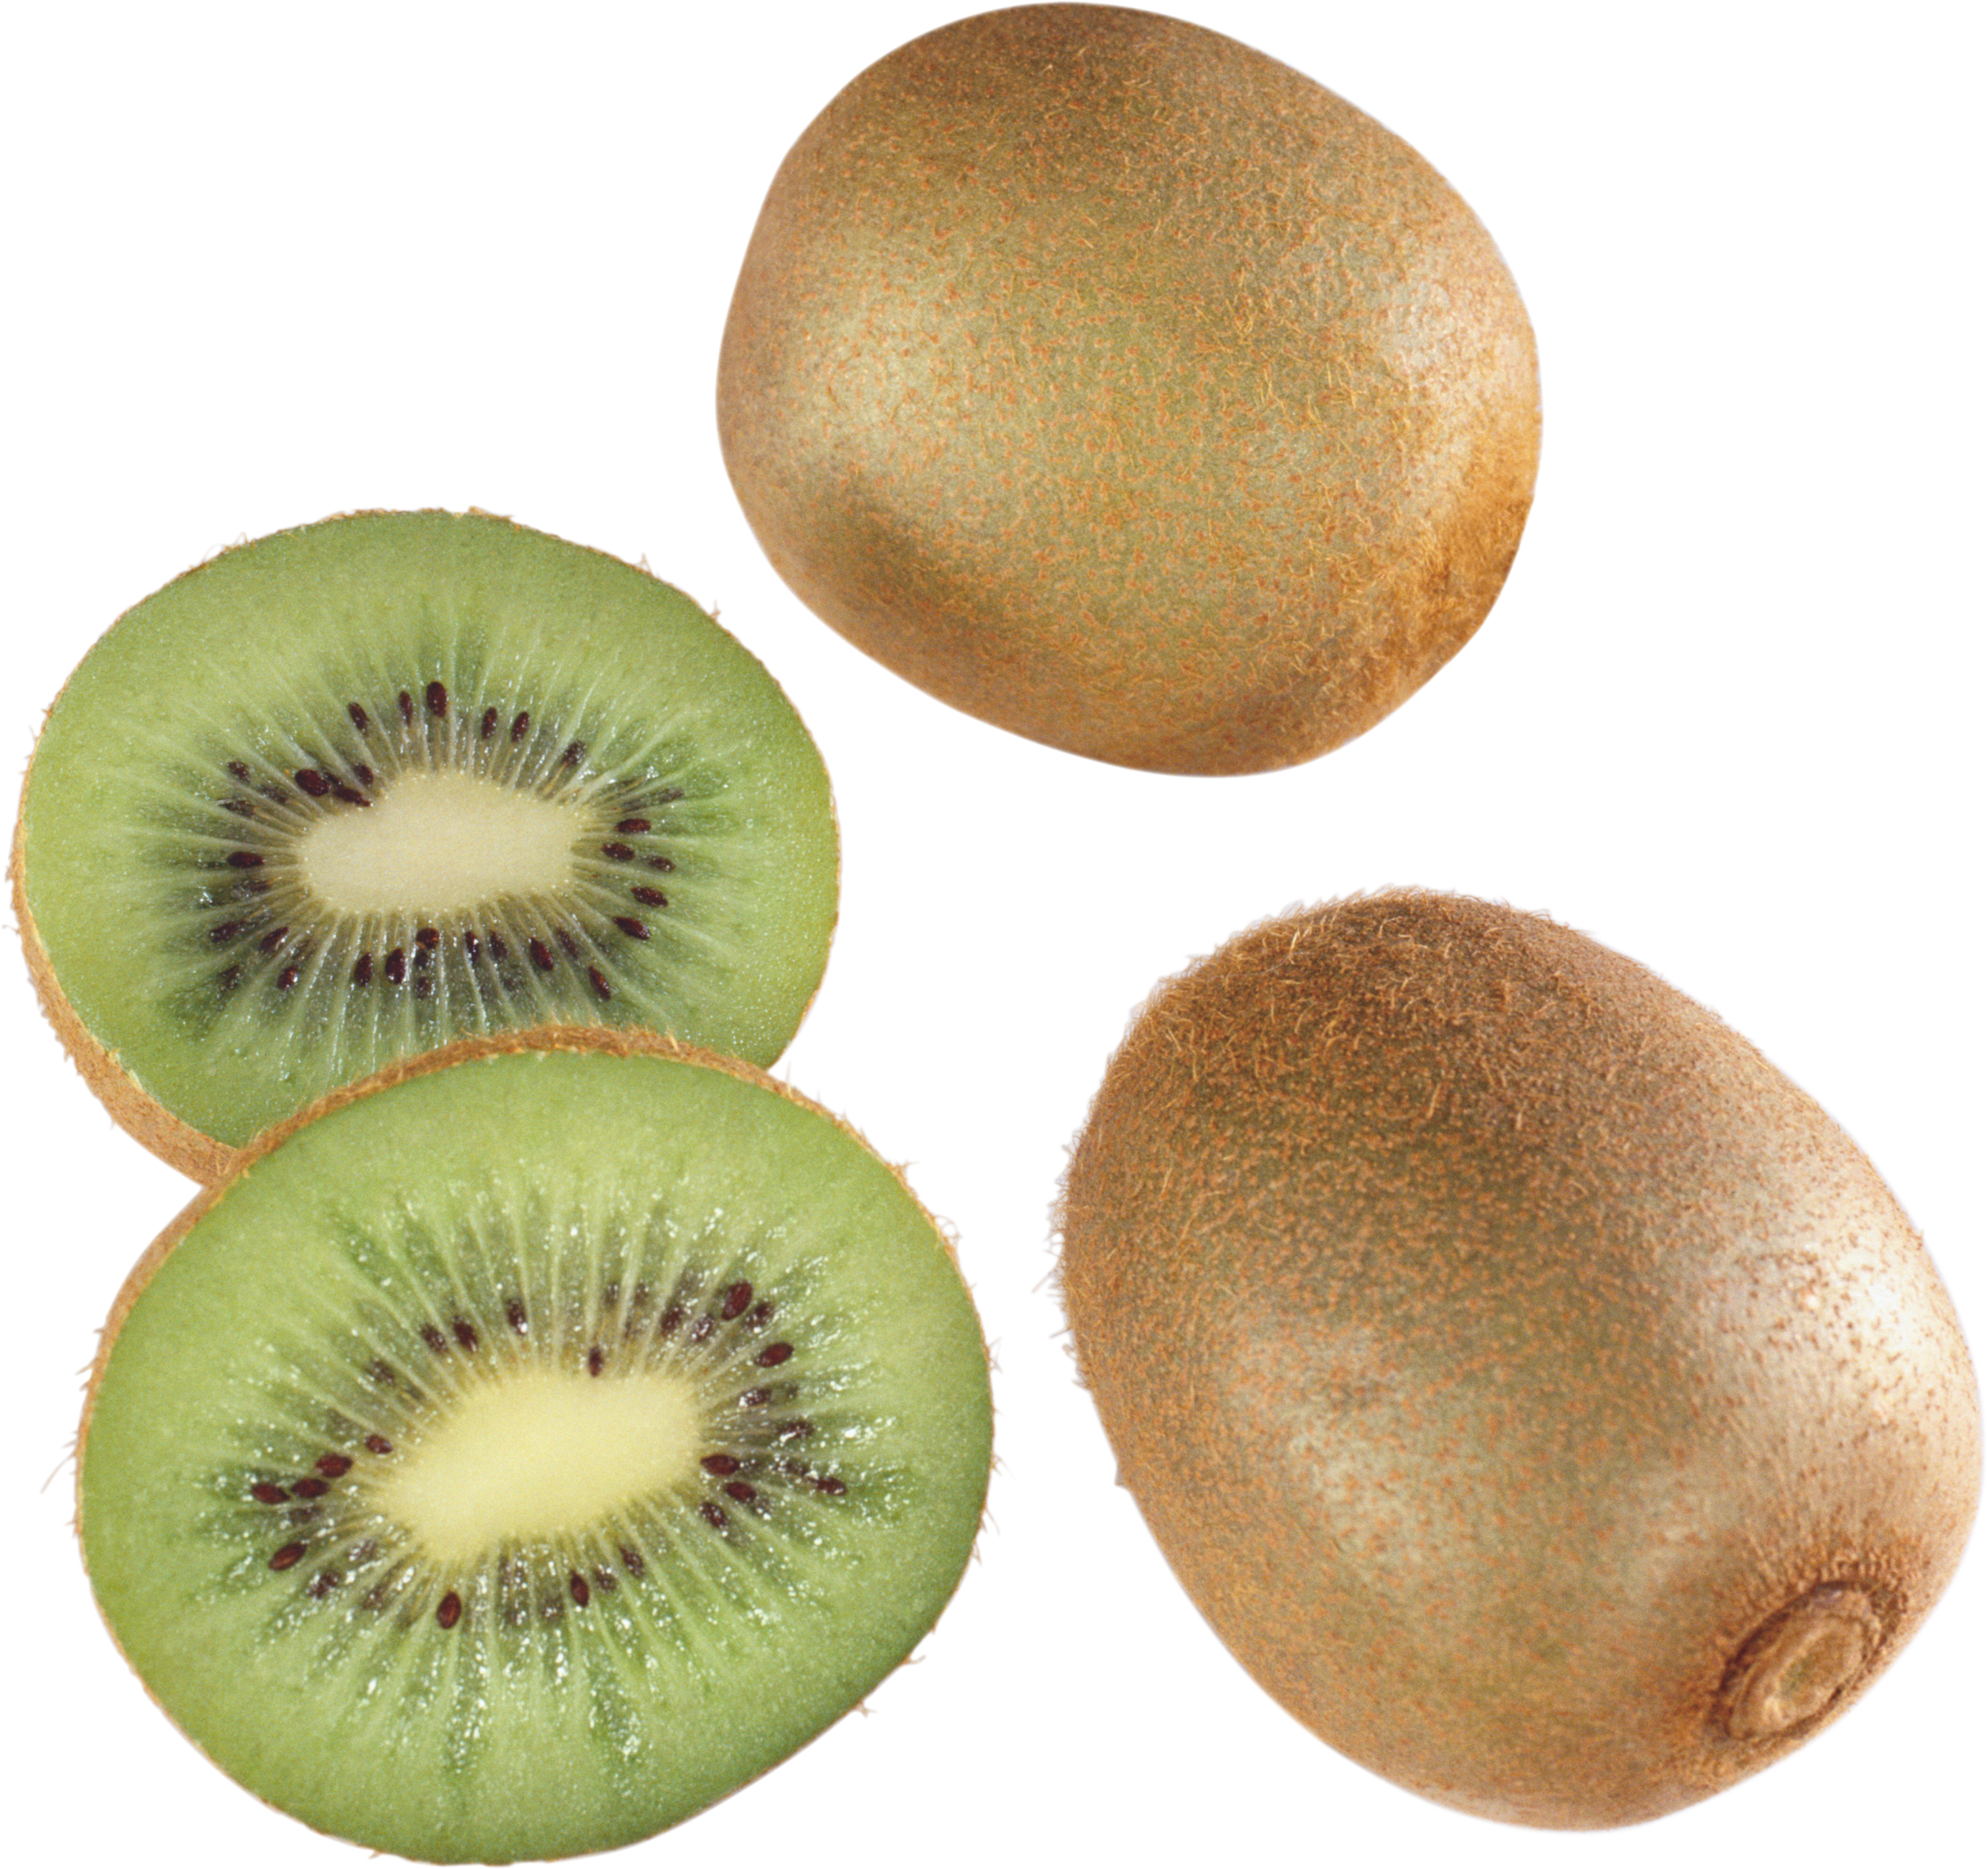 potato clipart kiwi